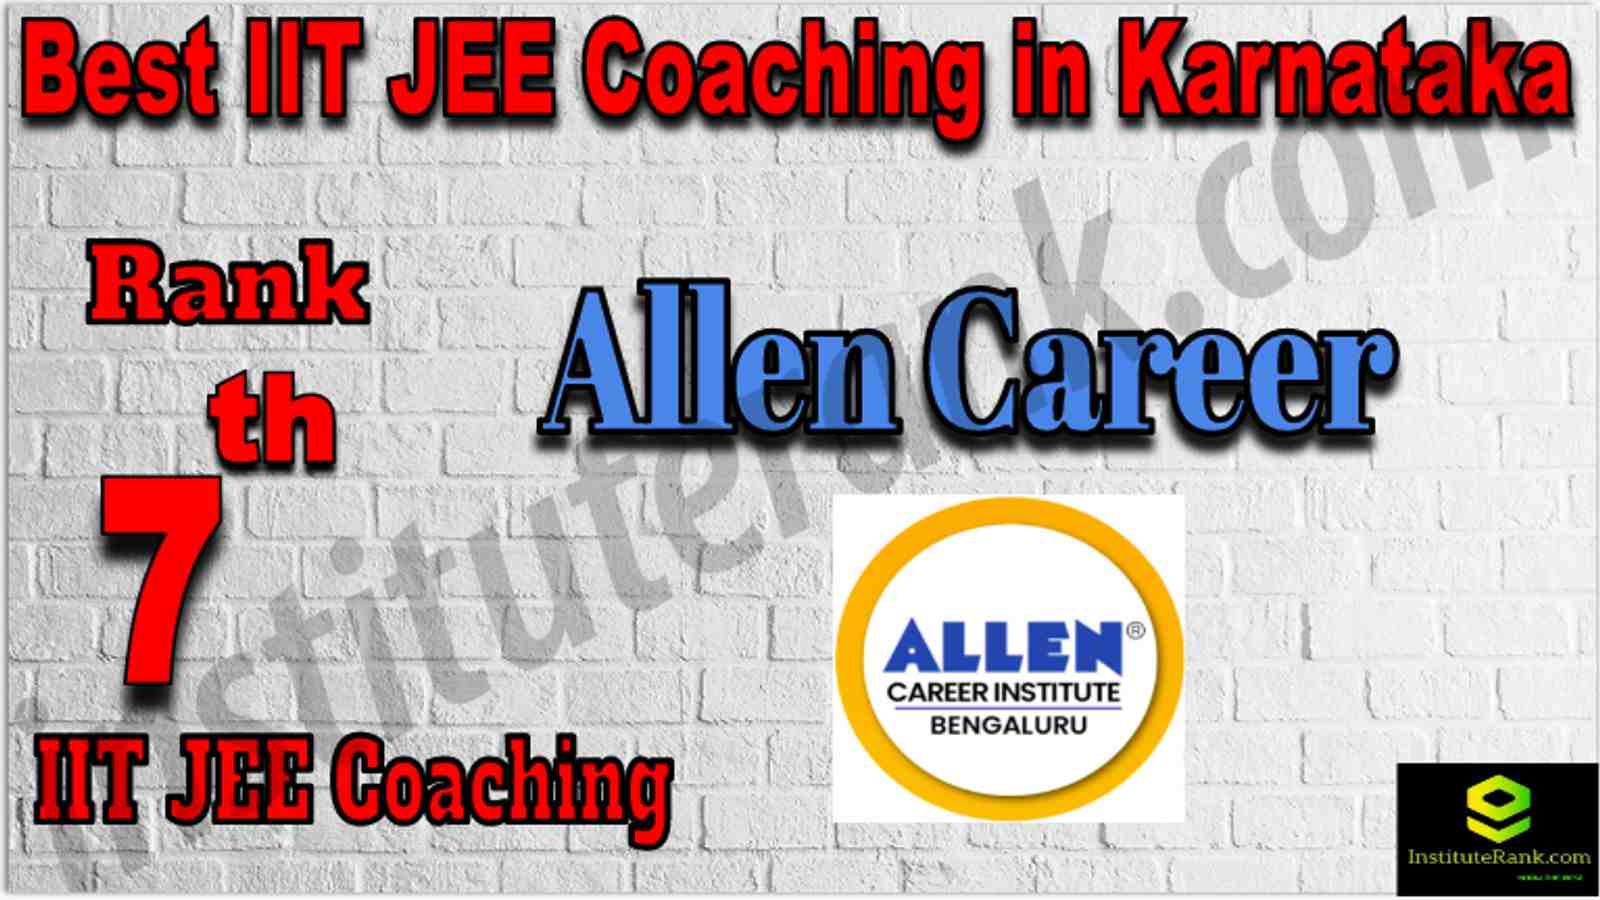 Rank 7th Best IIT JEE Coaching in Karnataka